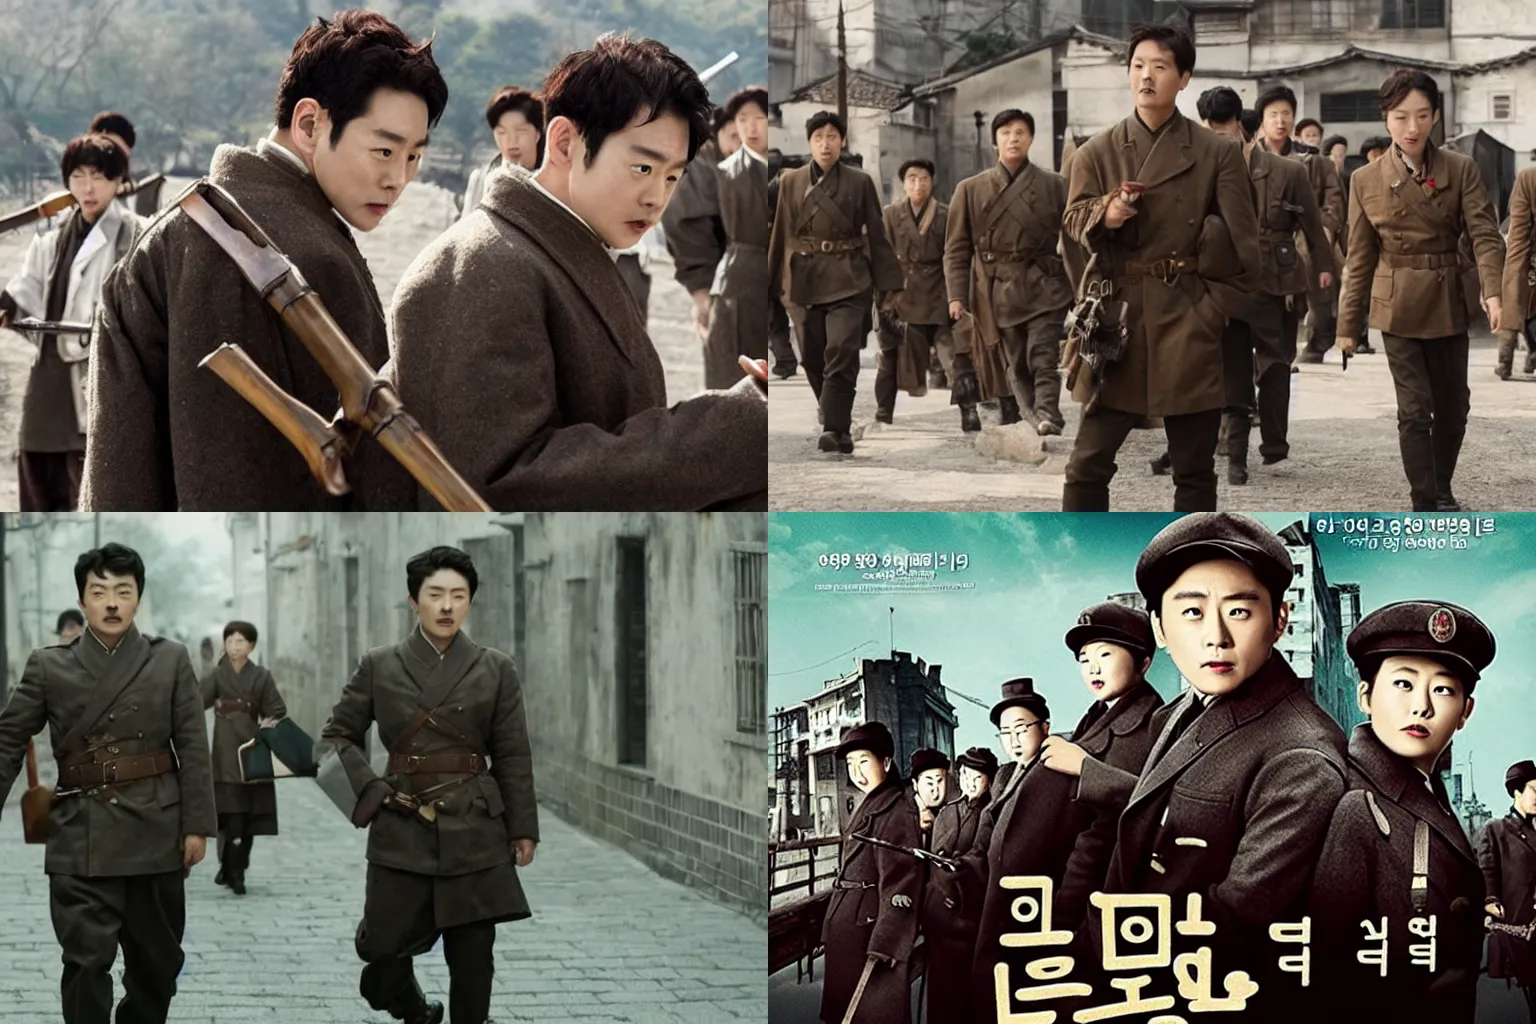 Prompt: korean film still from korean adaptation of inglourious basterds